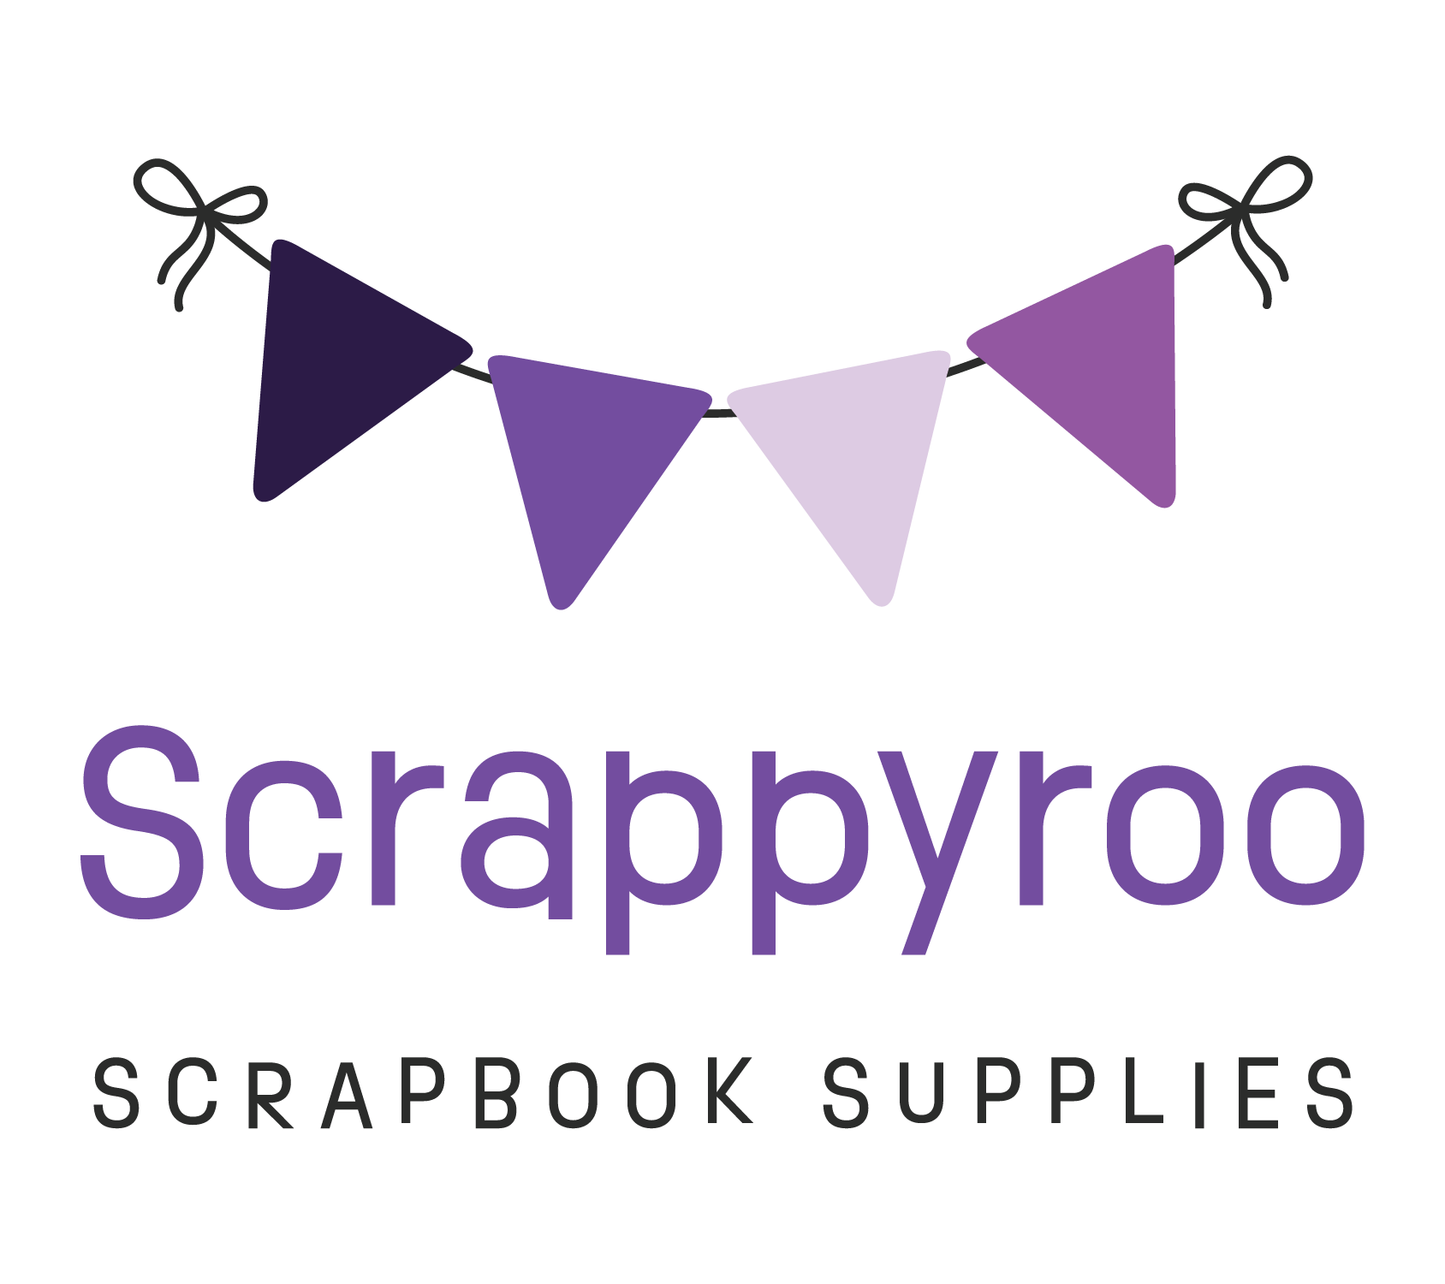 Scrappyroo Kit - Bella Blvd Birthday Bash - COMING SOON!